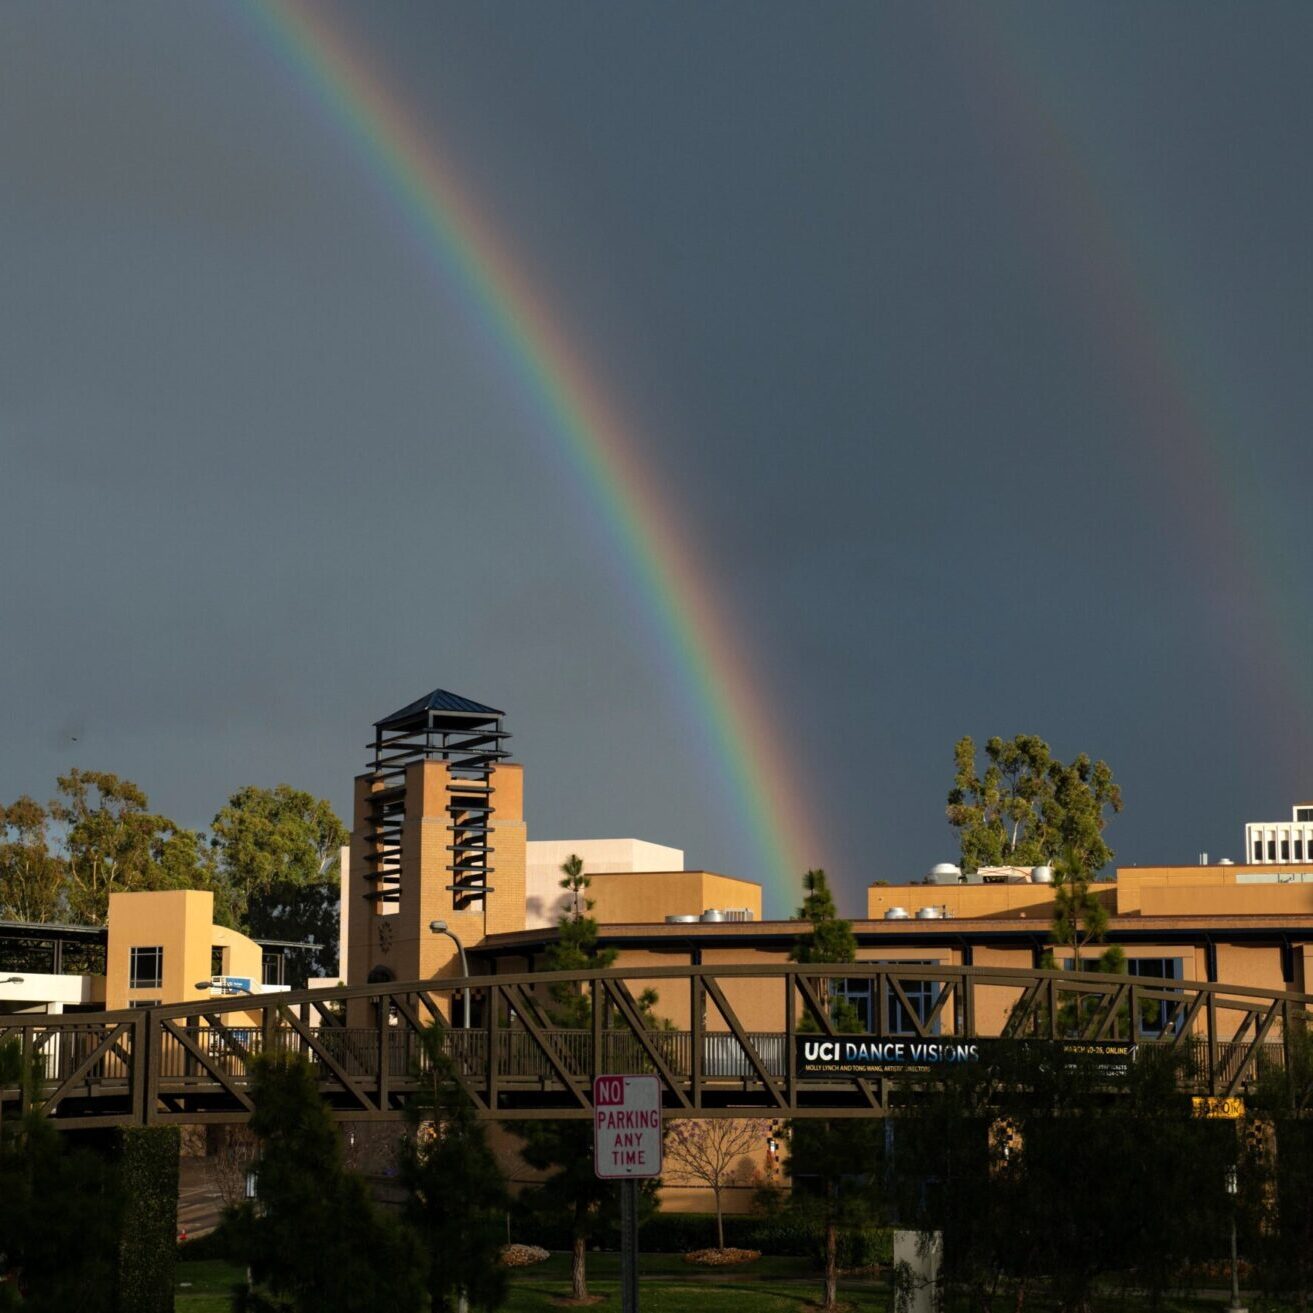 Rainbow over UC irvine campus